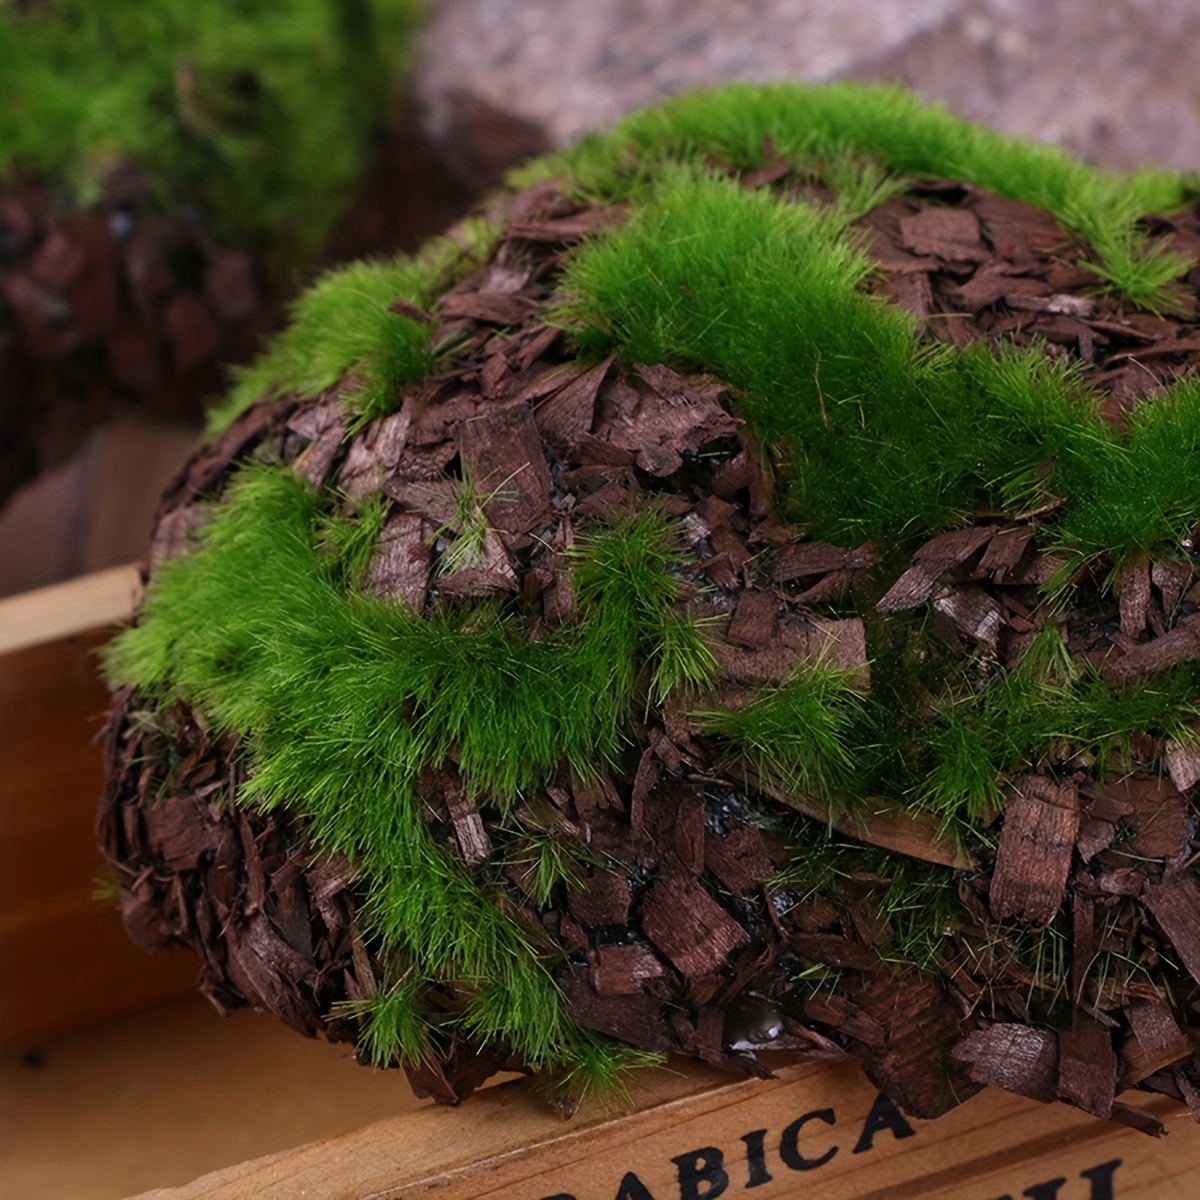 Artificial Moss Rocks Decorative Faux Green Moss Covered Stones Green  Stones Simulation Grass Bonsai Garden Diy Landscape 